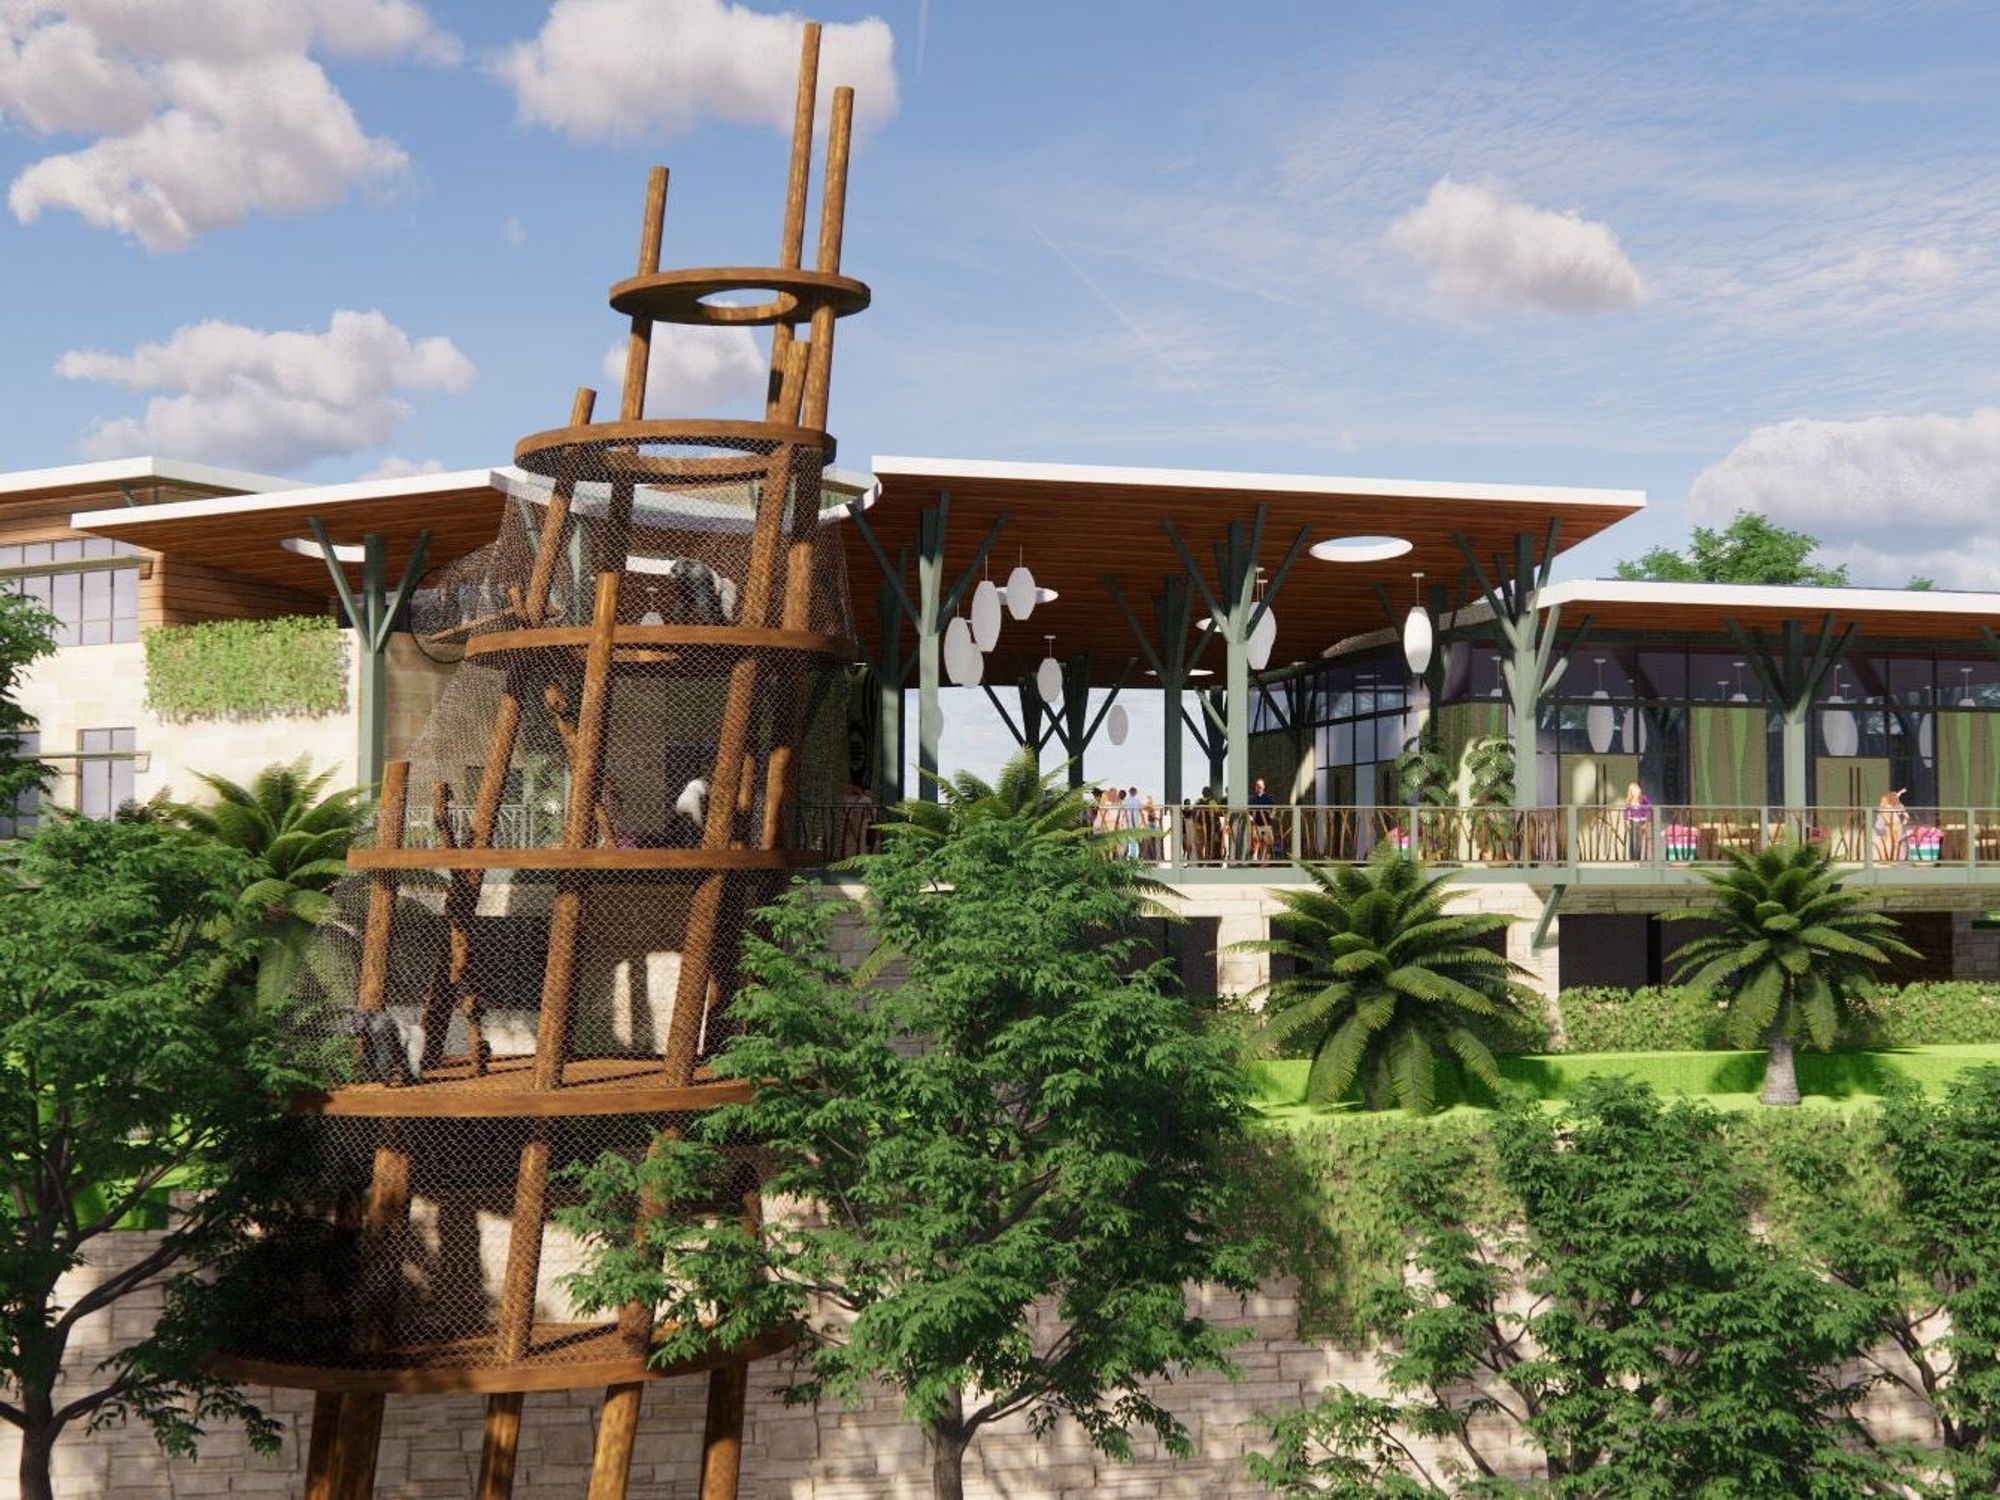 San Antonio Zoo expansion rendering